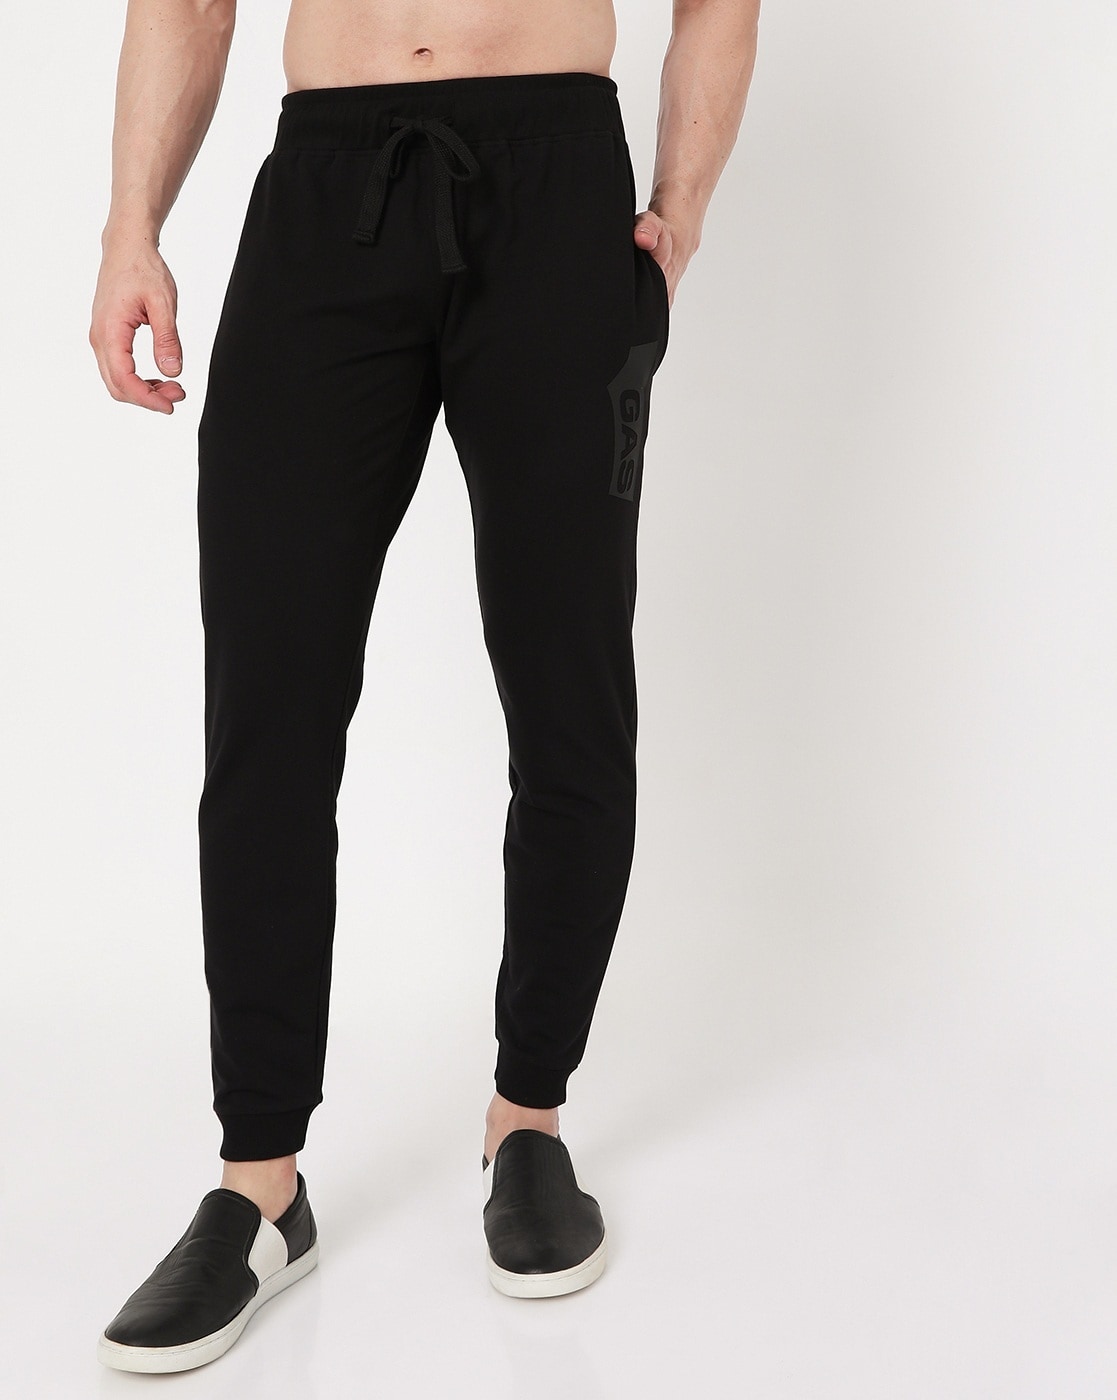 Buy Black Track Pants for Men by BODY MARK Online | Ajio.com